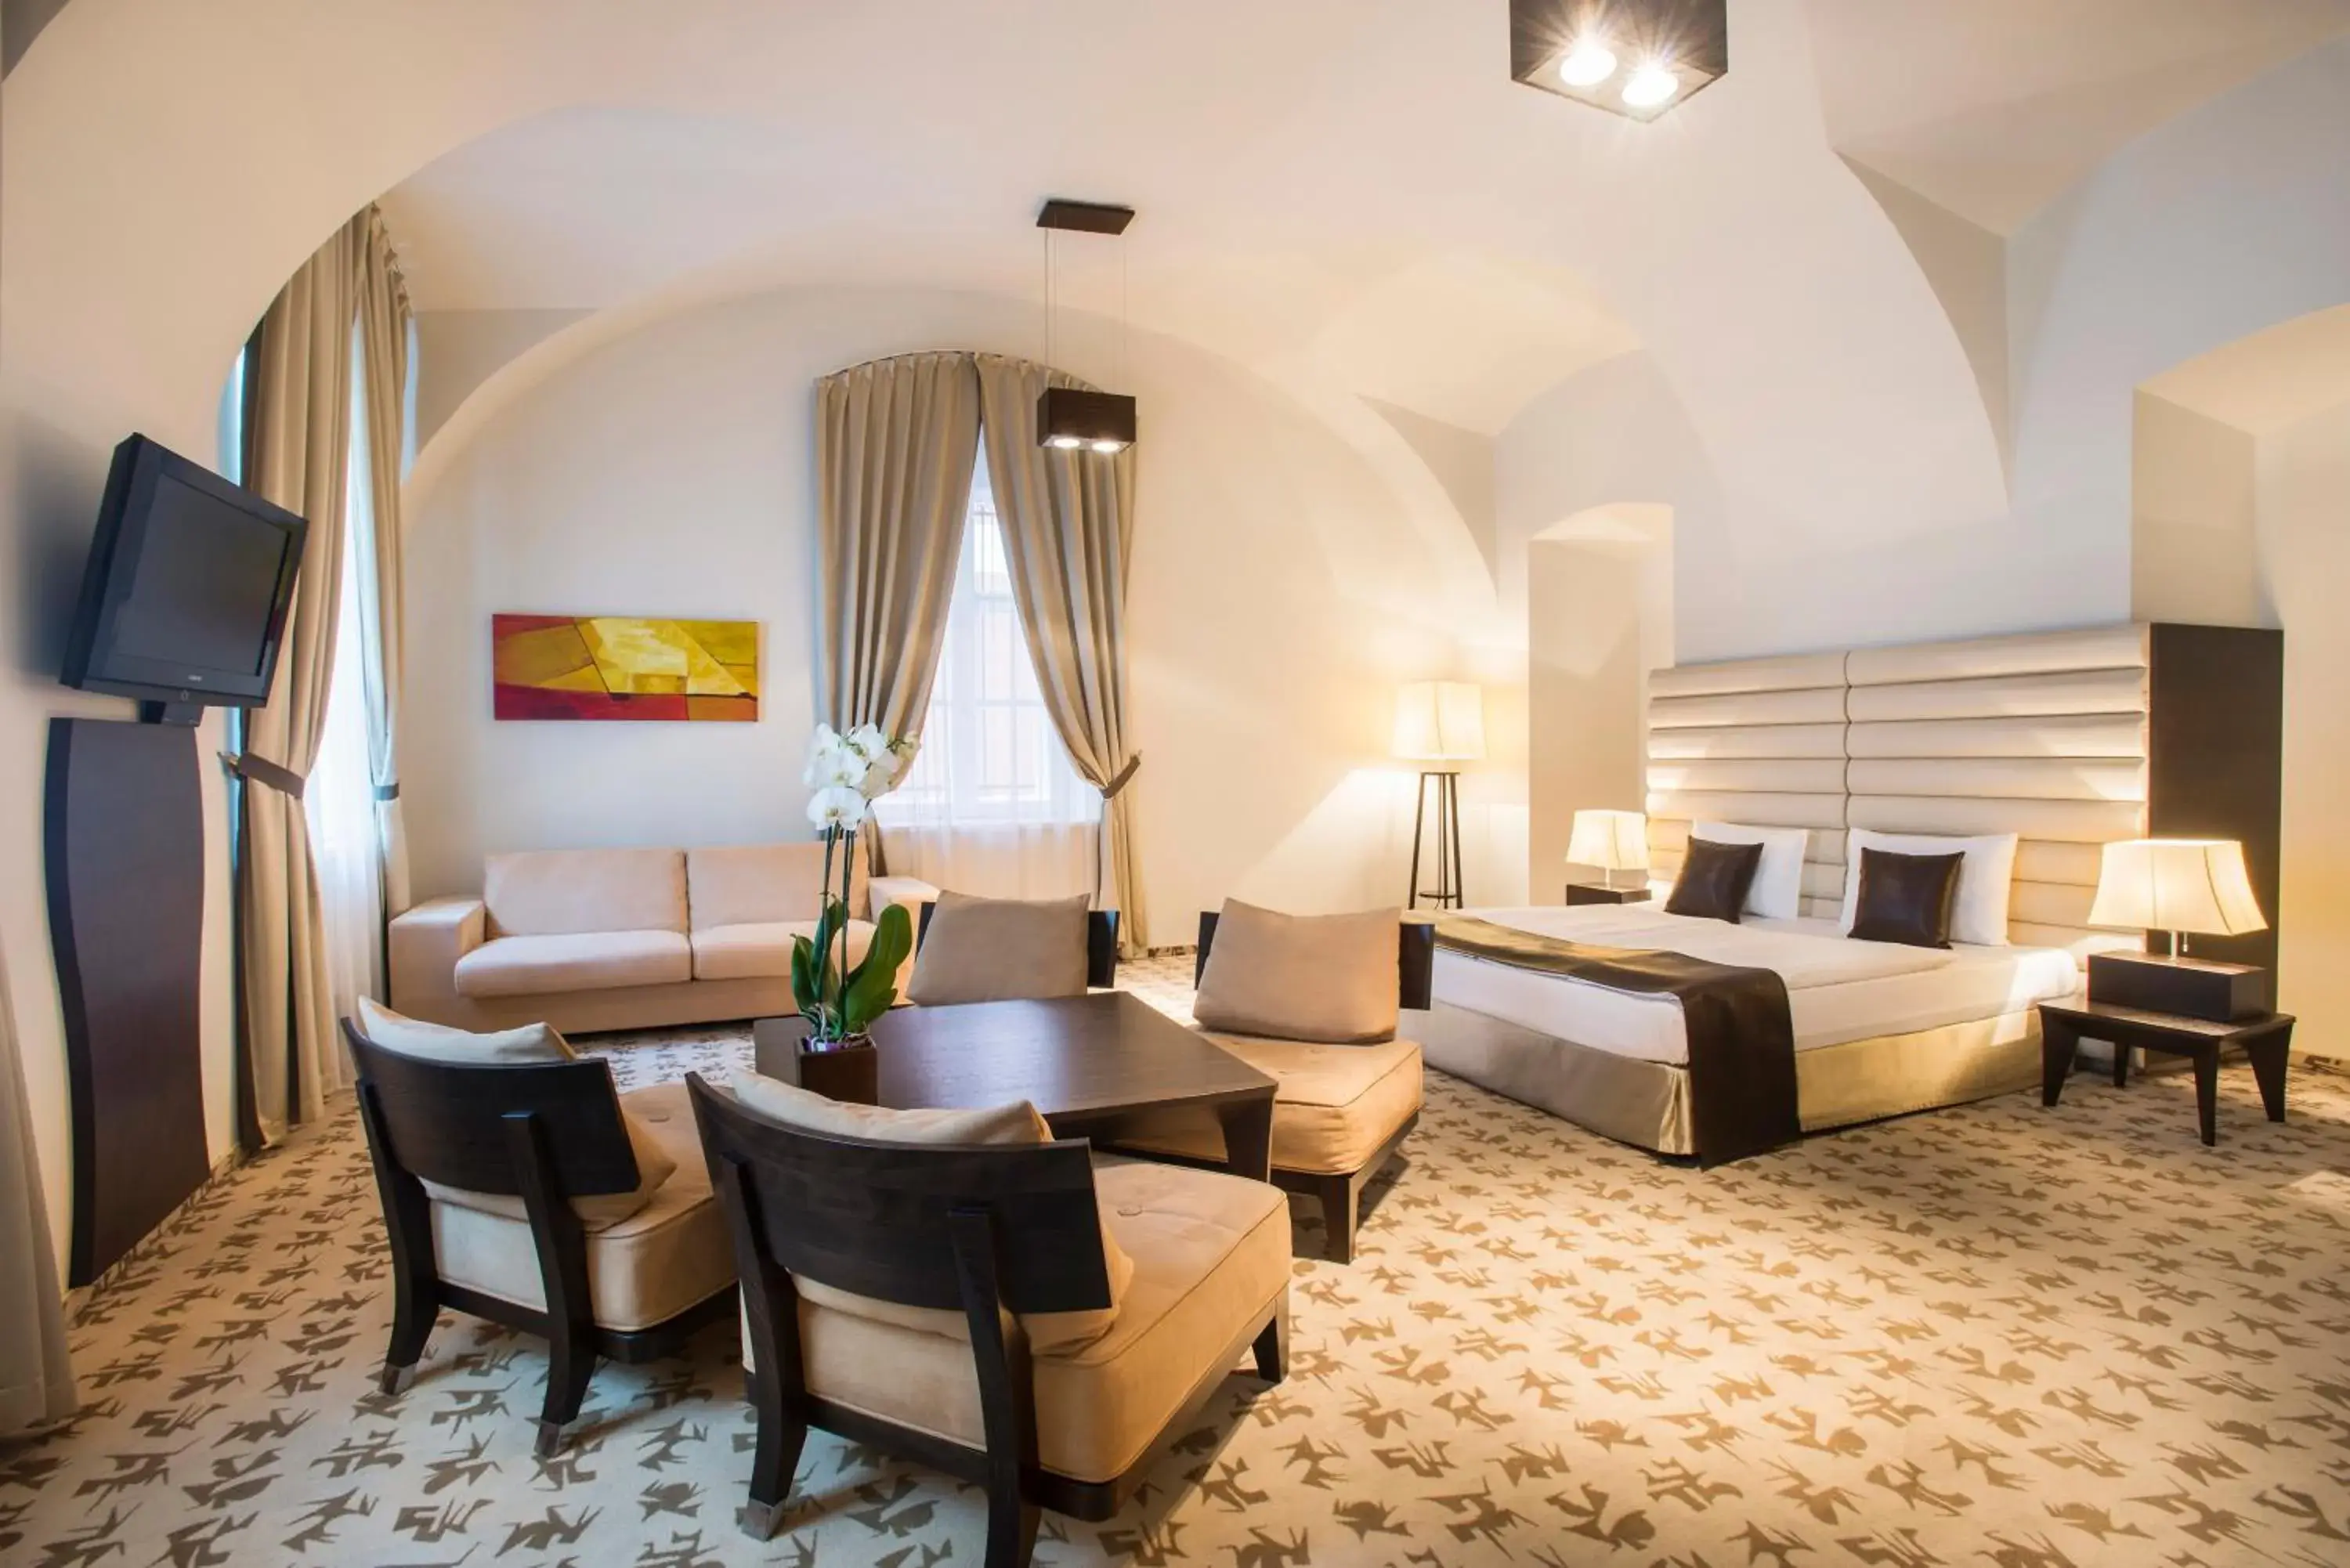 Bedroom, Lounge/Bar in Buda Castle Hotel Budapest